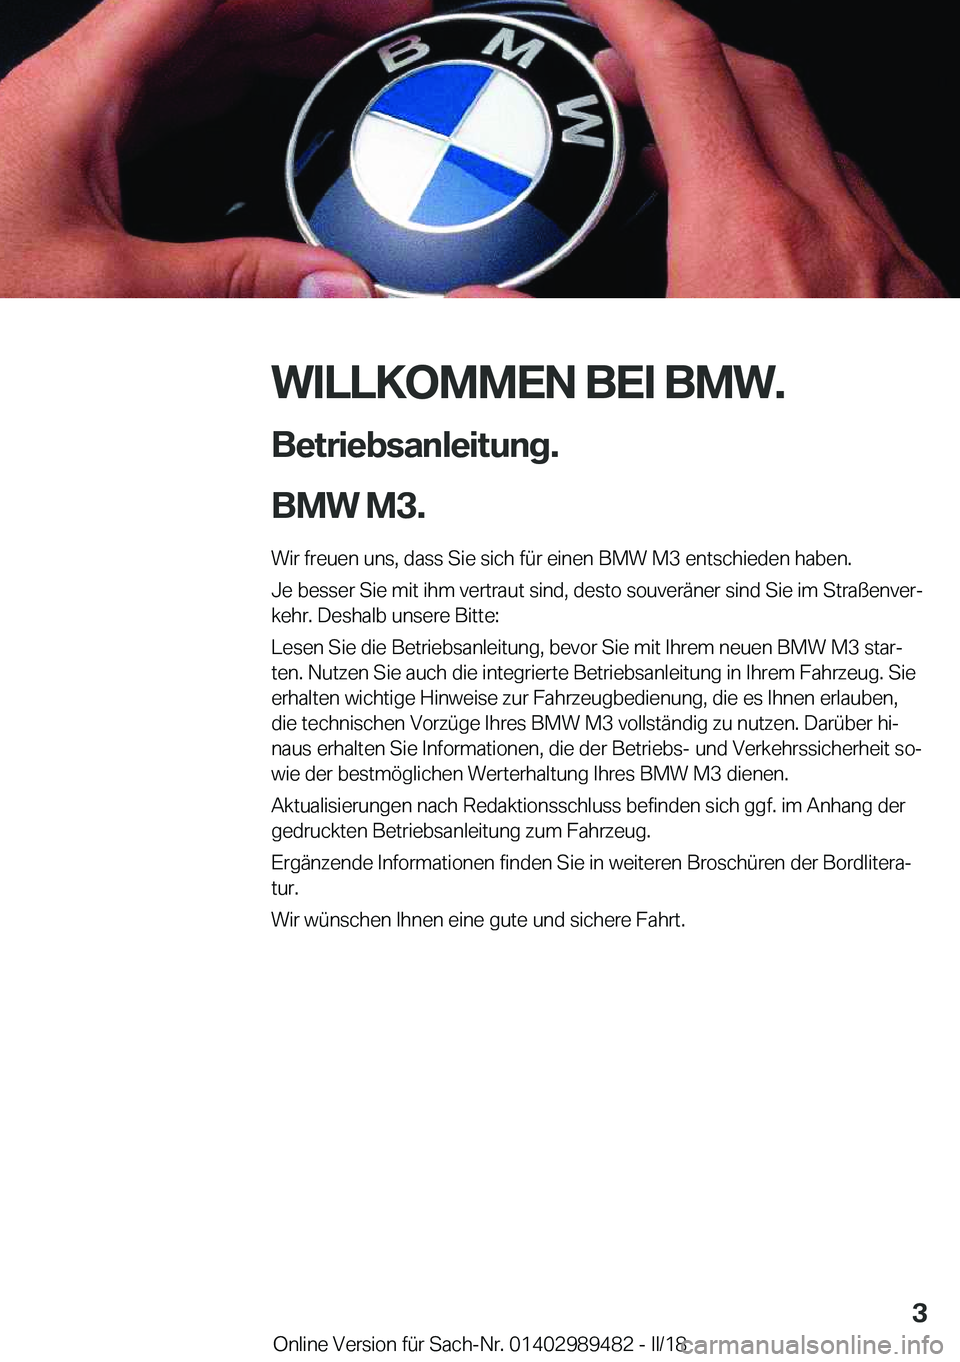 BMW M3 2018  Betriebsanleitungen (in German) �W�I�L�L�K�O�M�M�E�N��B�E�I��B�M�W�.�B�e�t�r�i�e�b�s�a�n�l�e�i�t�u�n�g�.
�B�M�W��M�3�. �W�i�r� �f�r�e�u�e�n� �u�n�s�,� �d�a�s�s� �S�i�e� �s�i�c�h� �f�